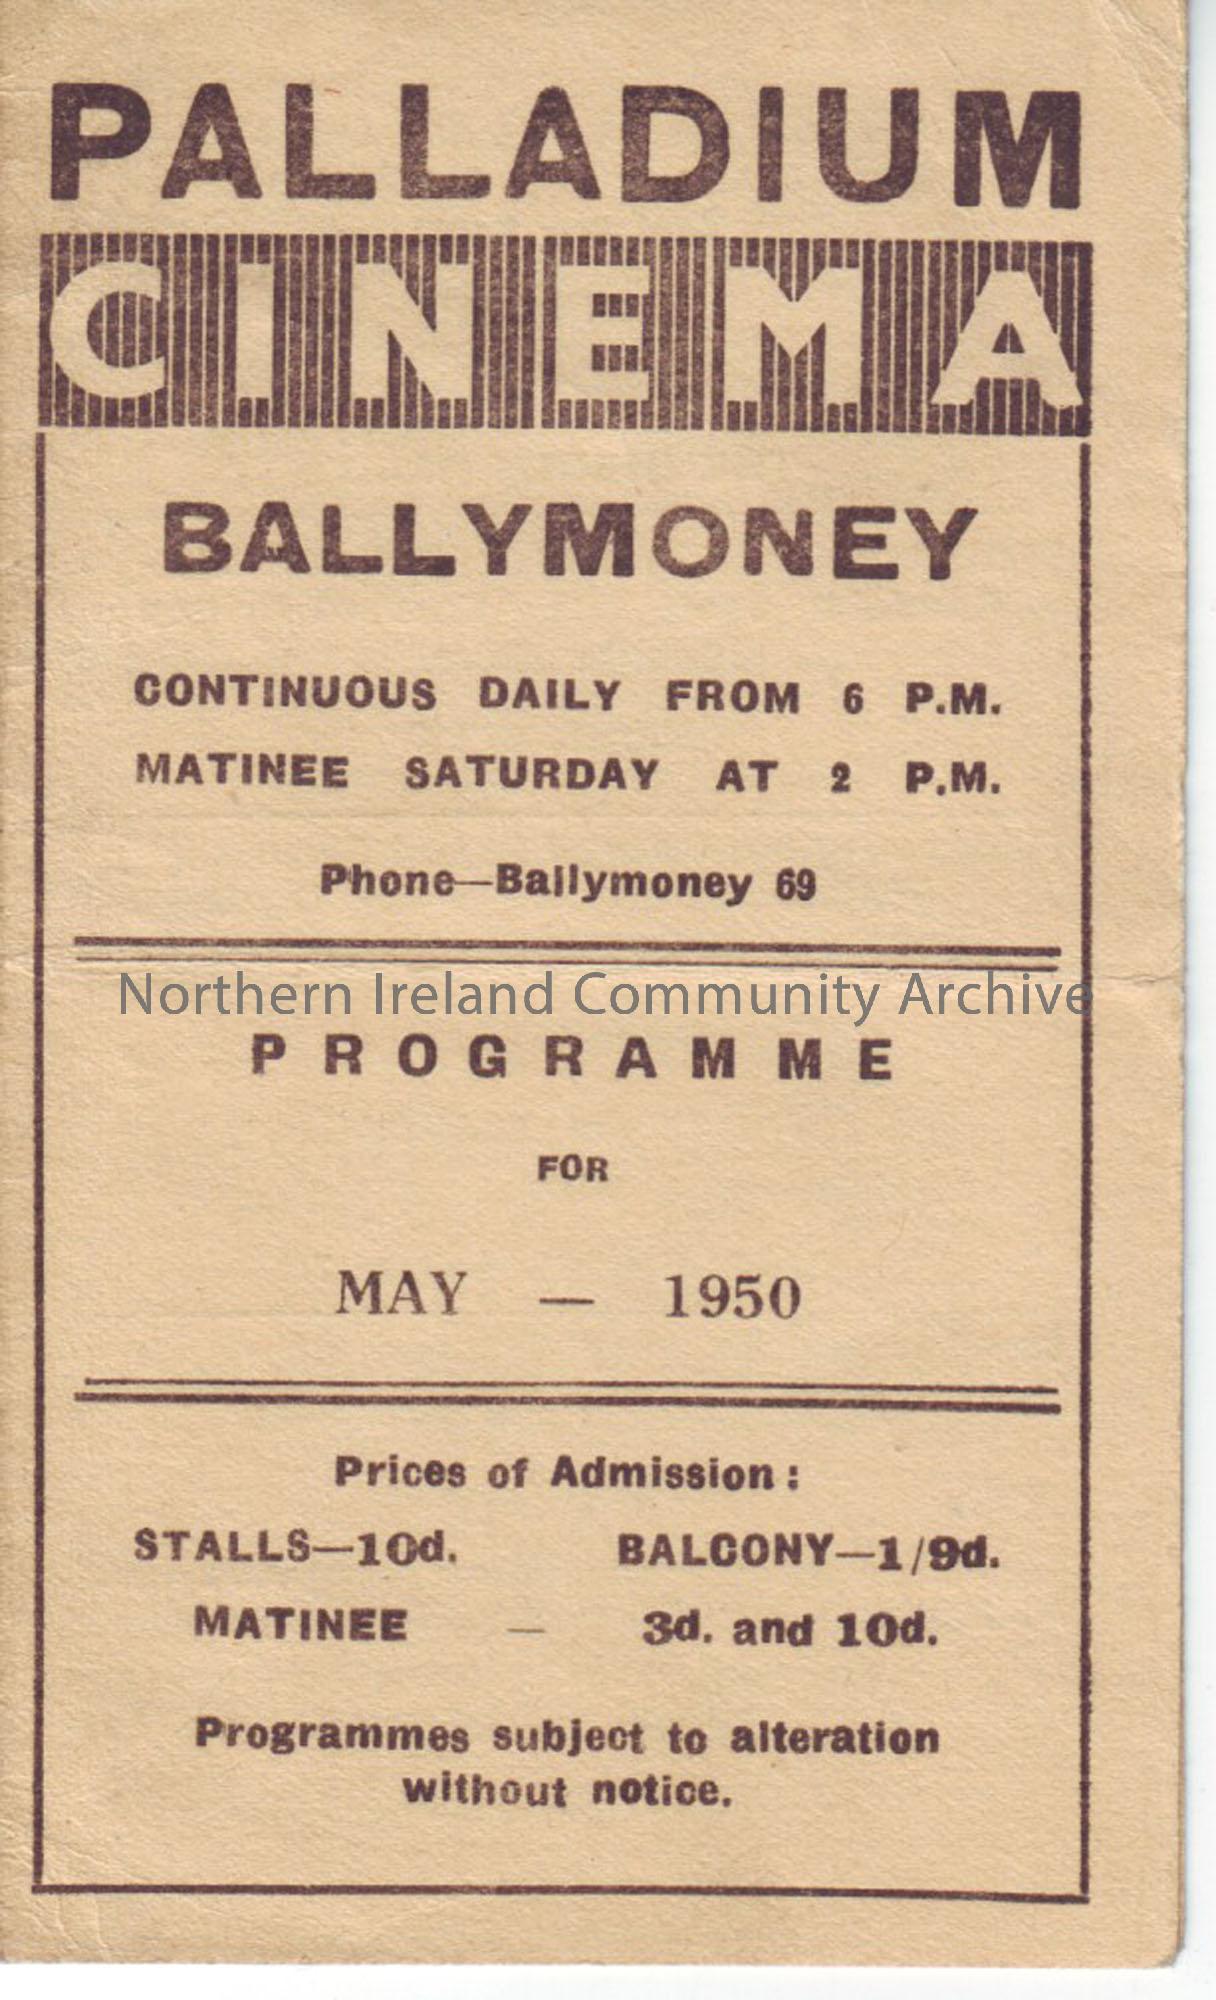 cream monthly programme for Ballymoney Palladium cinema- May 1950